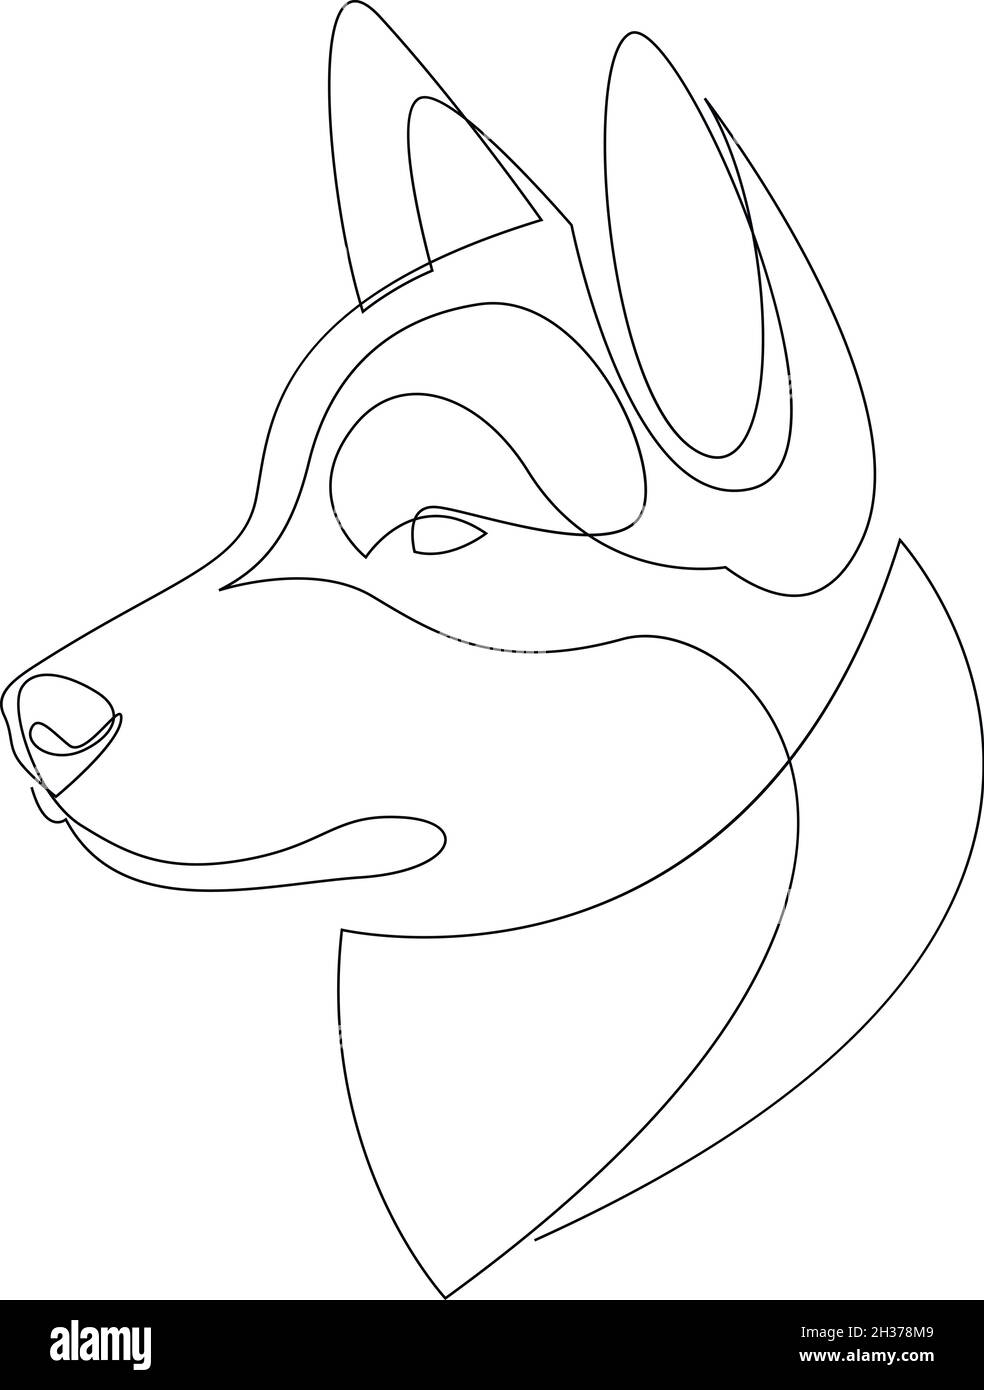 Línea continua Dibujo de Husky siberiano. Ilustración vectorial Dibujo de una línea. Ilustración del Vector